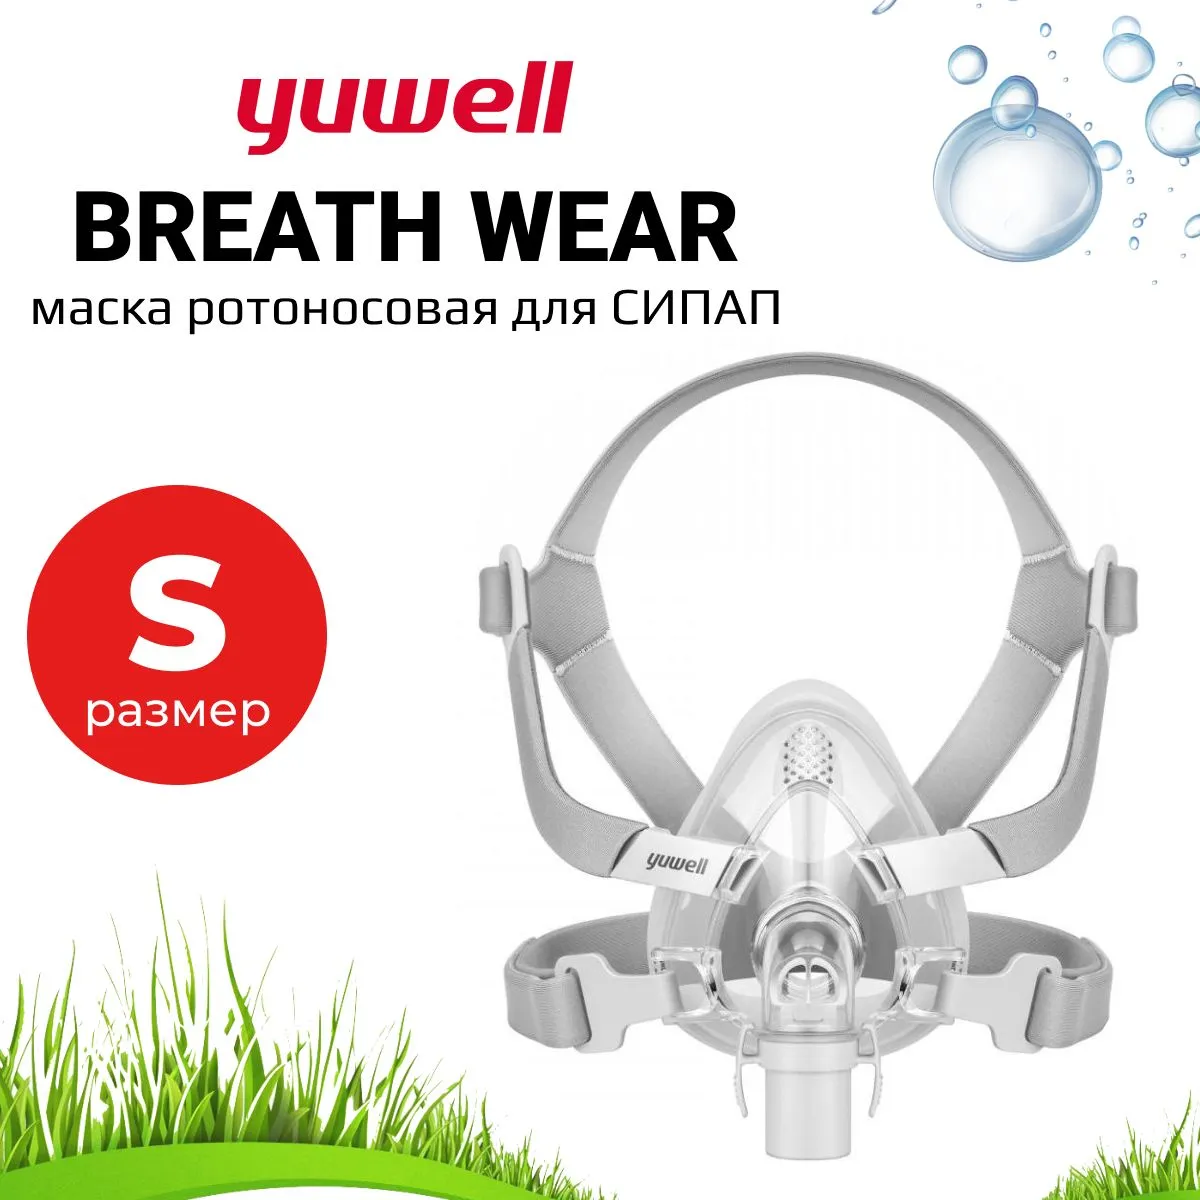 Ротоносовая Маска Yuwell BreathWear Series YF-02 (Размер S) для СИПАП